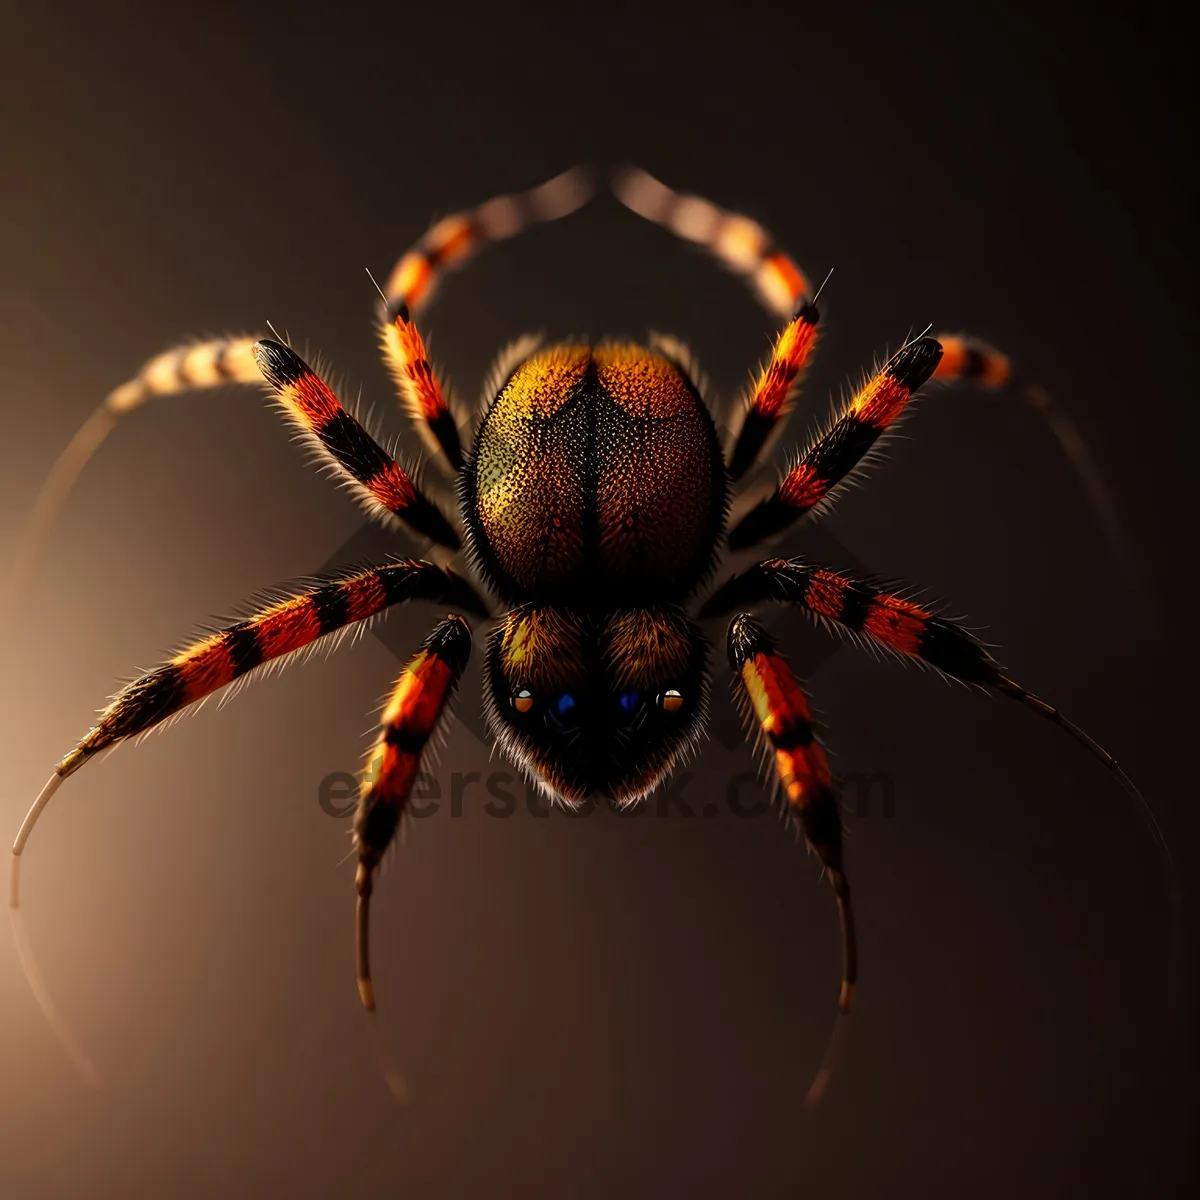 Picture of Close-up of Black Barn Spider, an Arachnid Arthropod